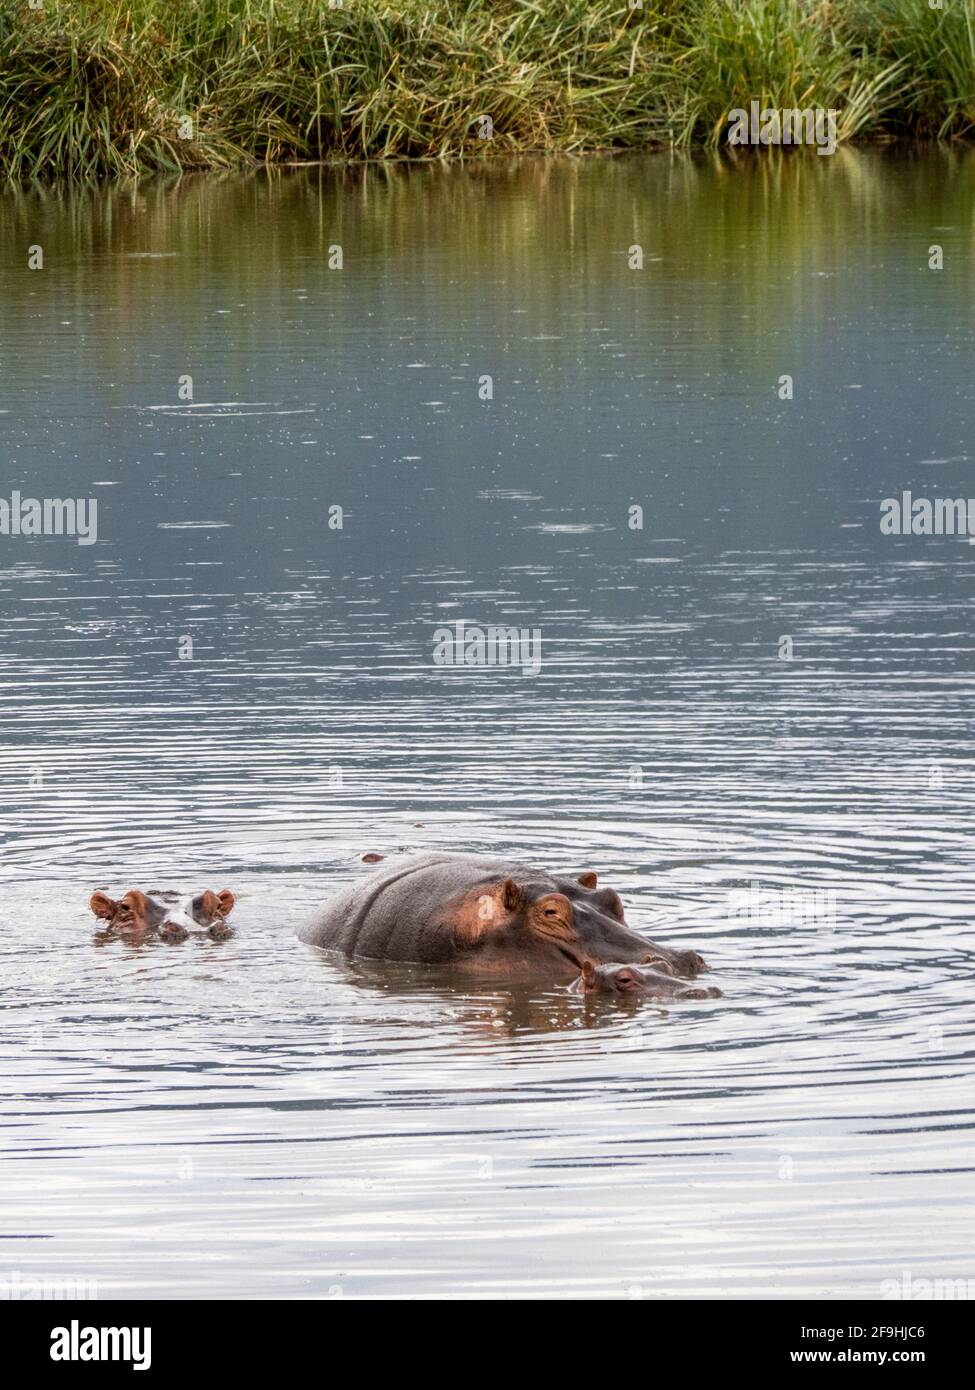 Ngorongoro Crater, Tanzania, Africa - March 1, 2020: Hippos in lake in Ngorongoro Crater Stock Photo